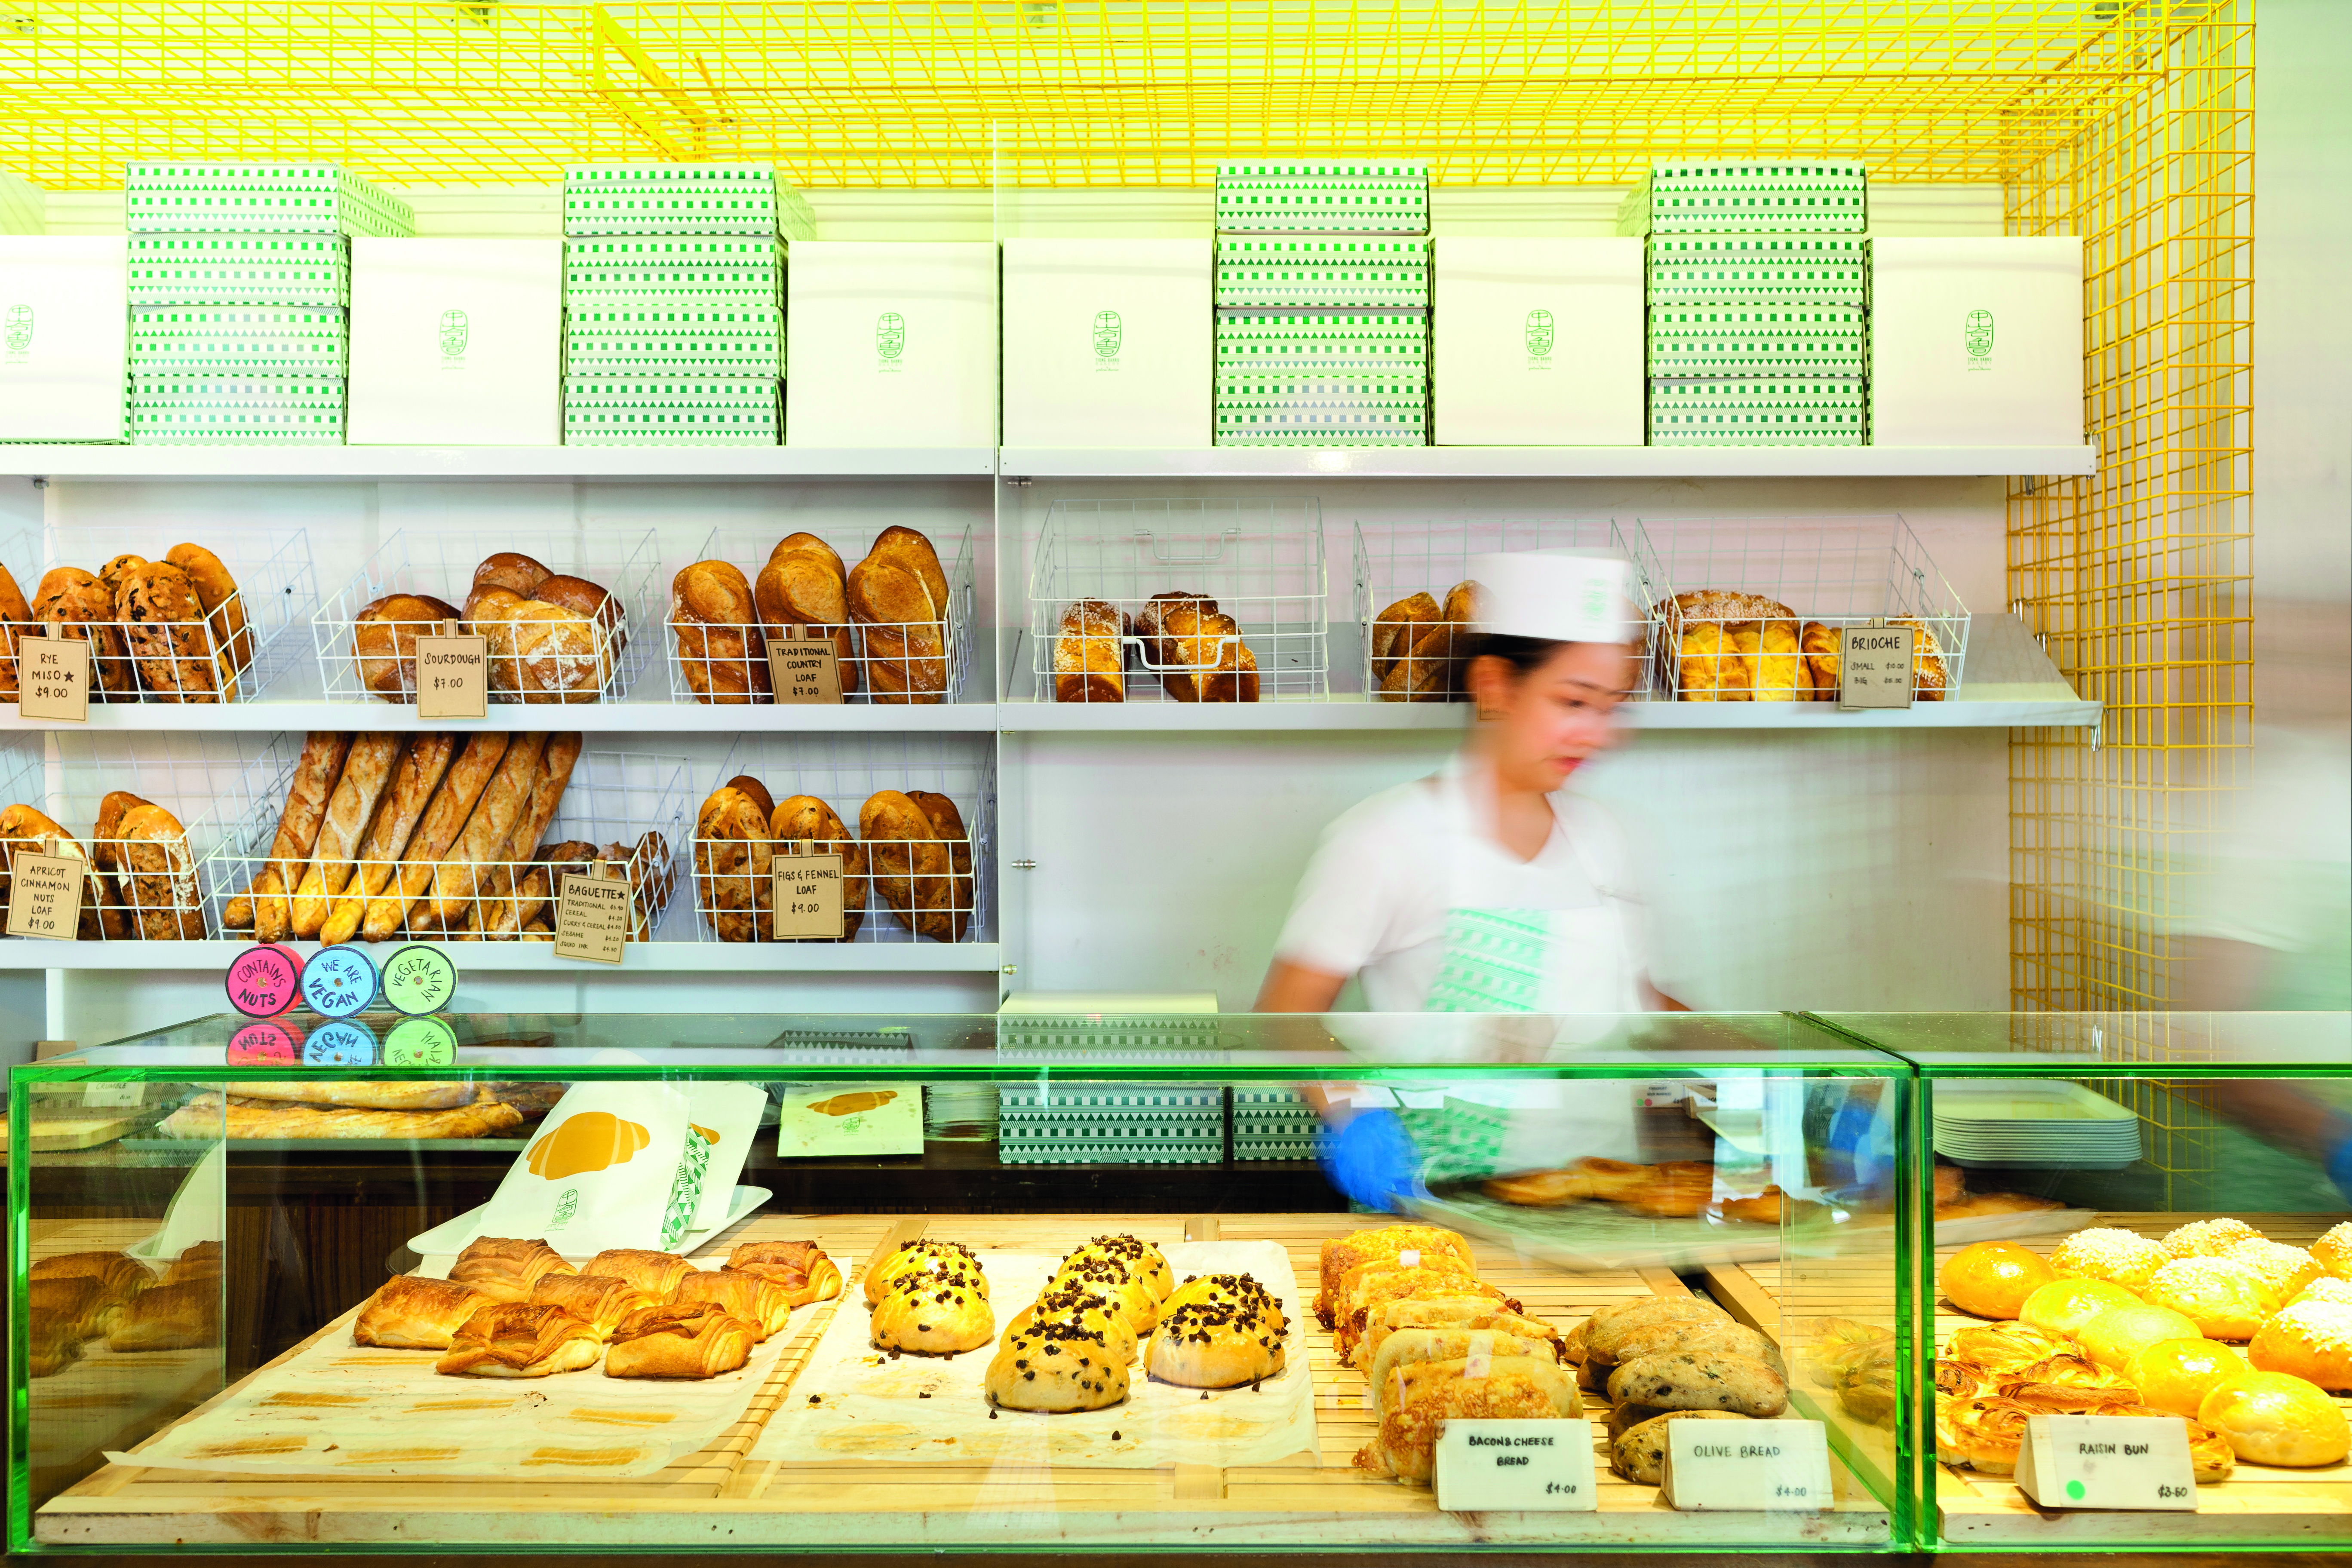 A peek into the Tiong Bahru Bakery. 